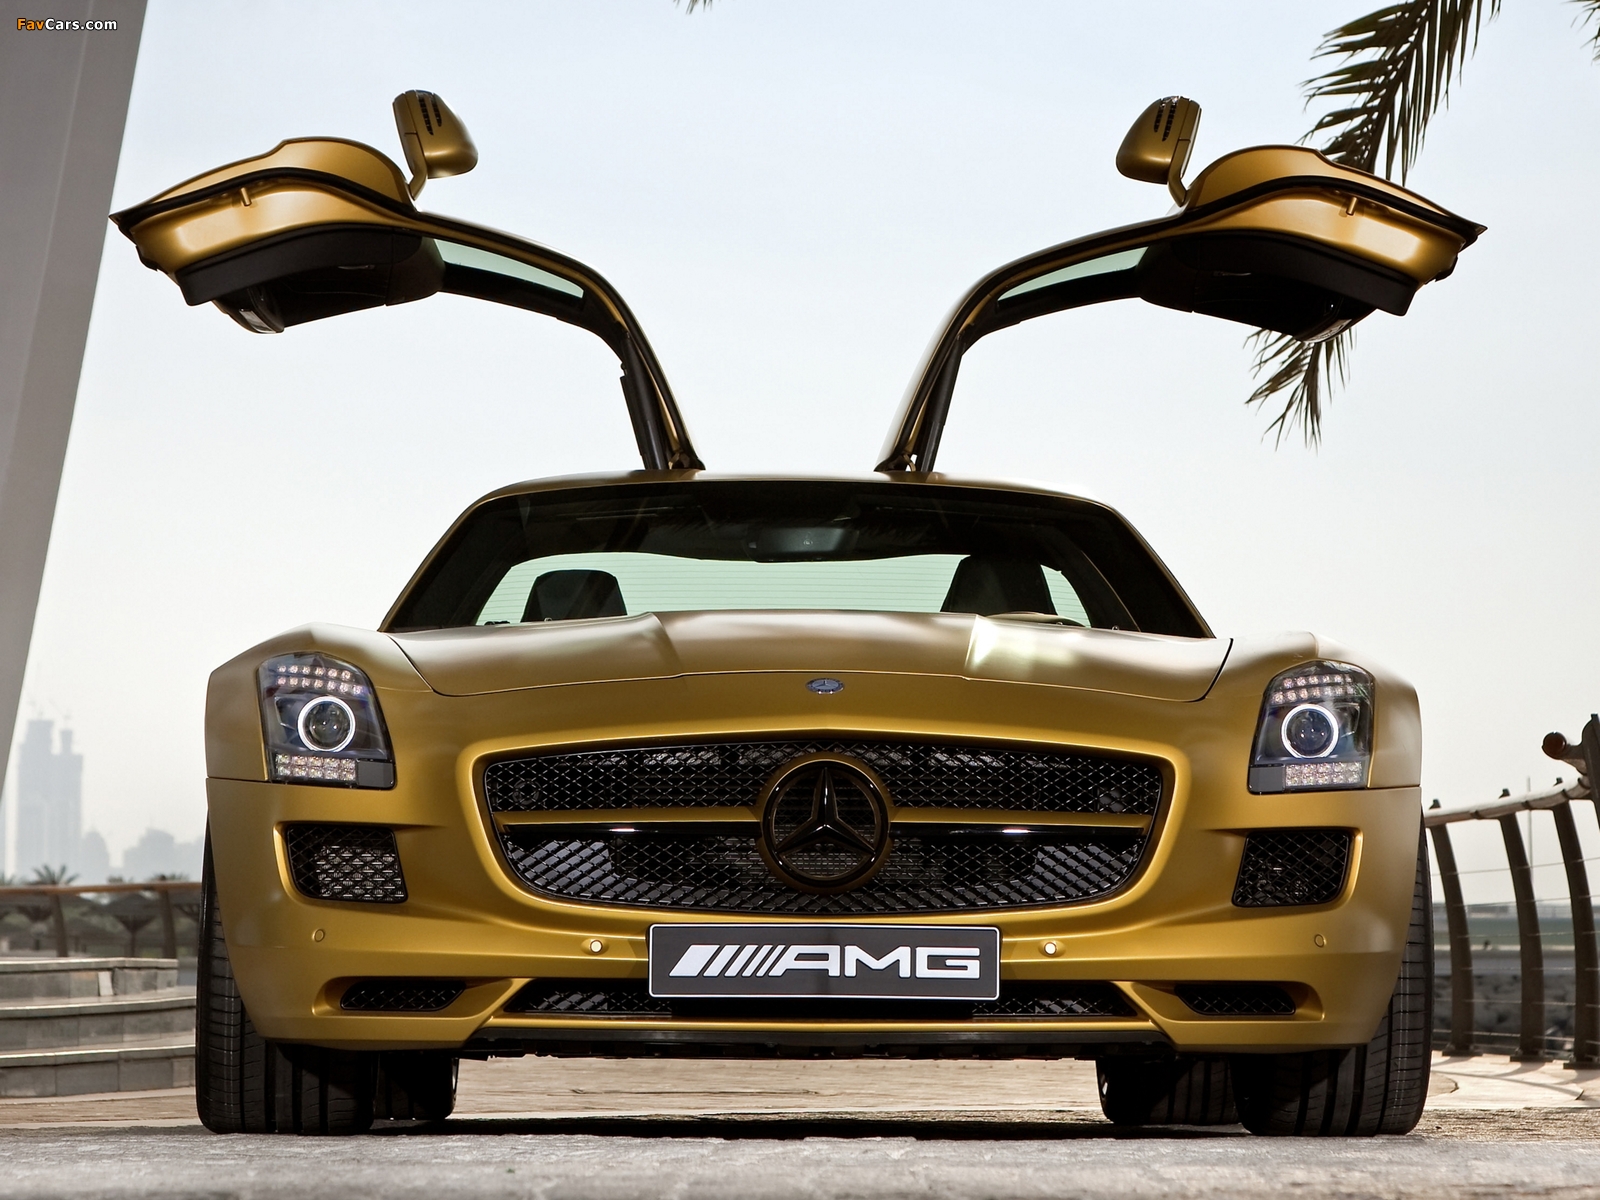 Mercedes-Benz SLS 63 AMG Desert Gold (C197) 2010 pictures (1600 x 1200)